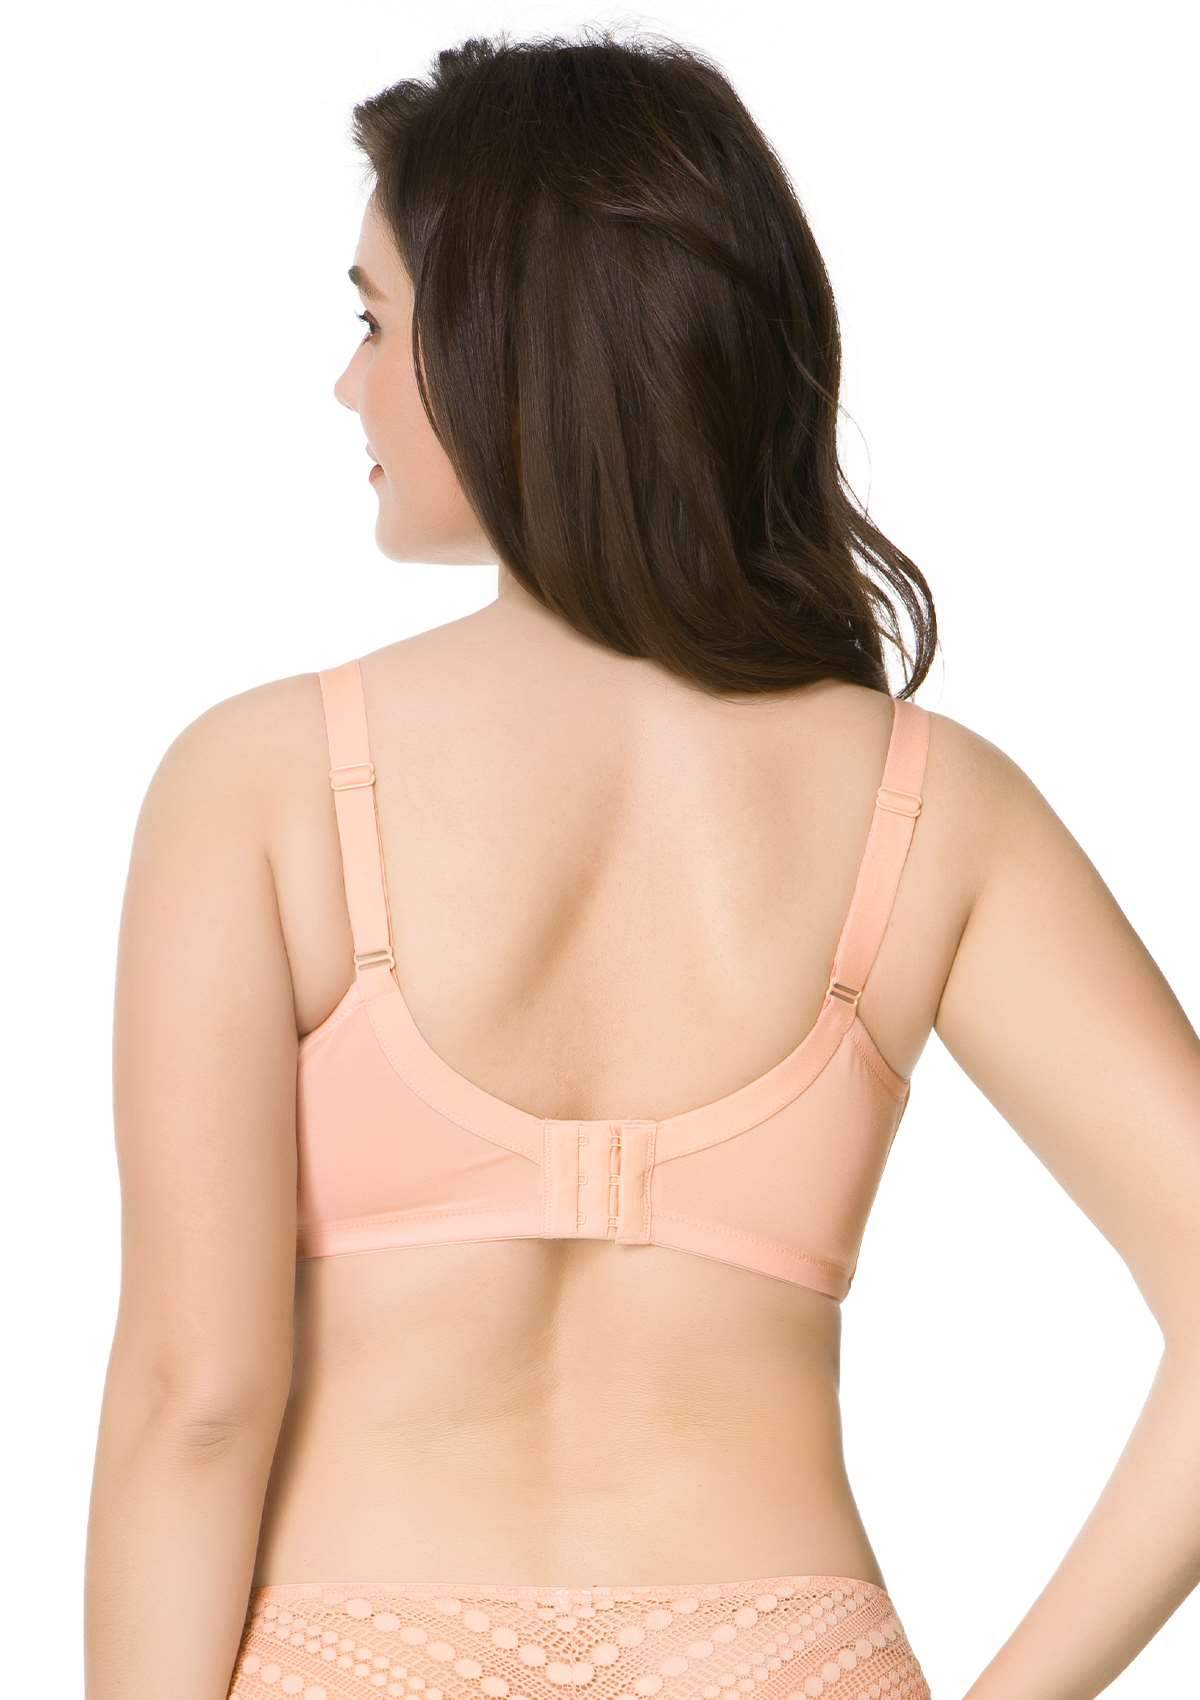 HSIA Heroine Lace Bra And Panty: Best Full Figure Minimizer Bra - Rose Cloud / 40 / C